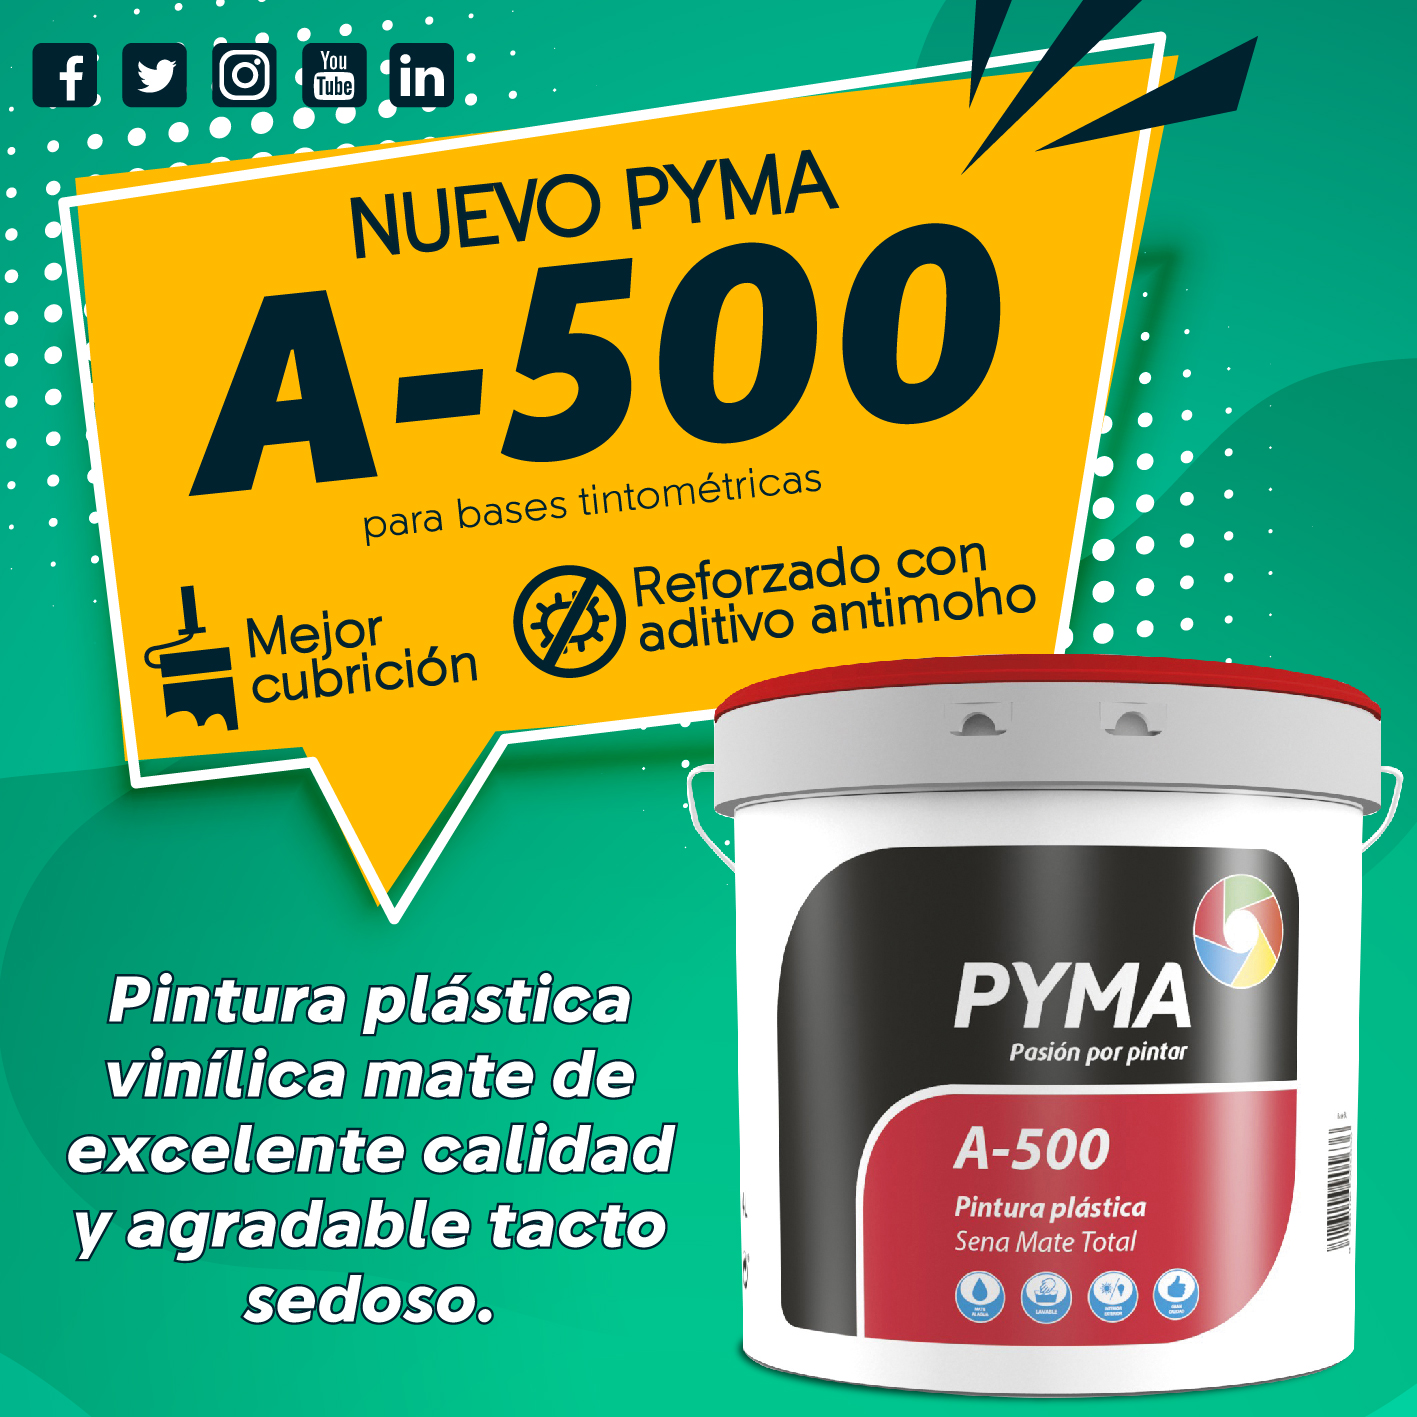 Pyma A-500 - Plata Service